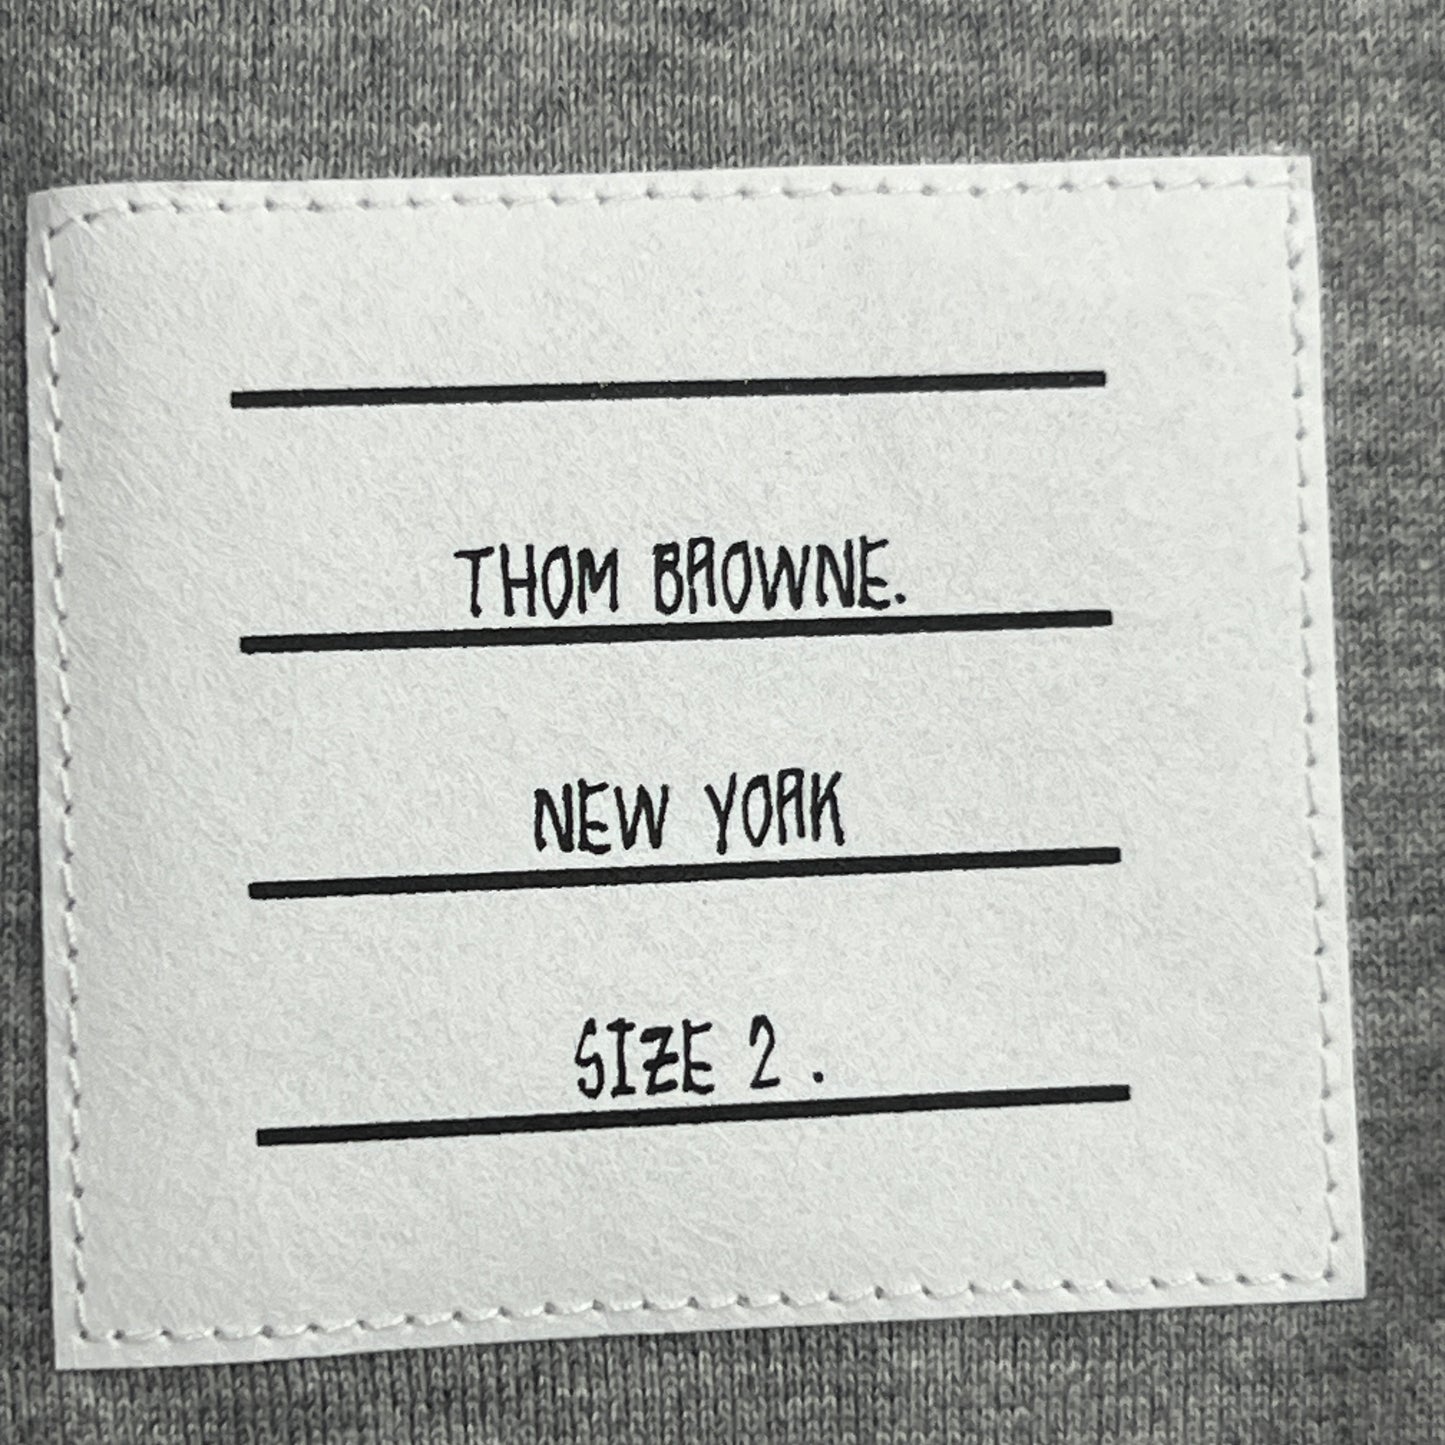 THOM BROWNE SS Tee RWB Pocket Tee in Medium Weight Jersey Light Grey Size 2 (New)